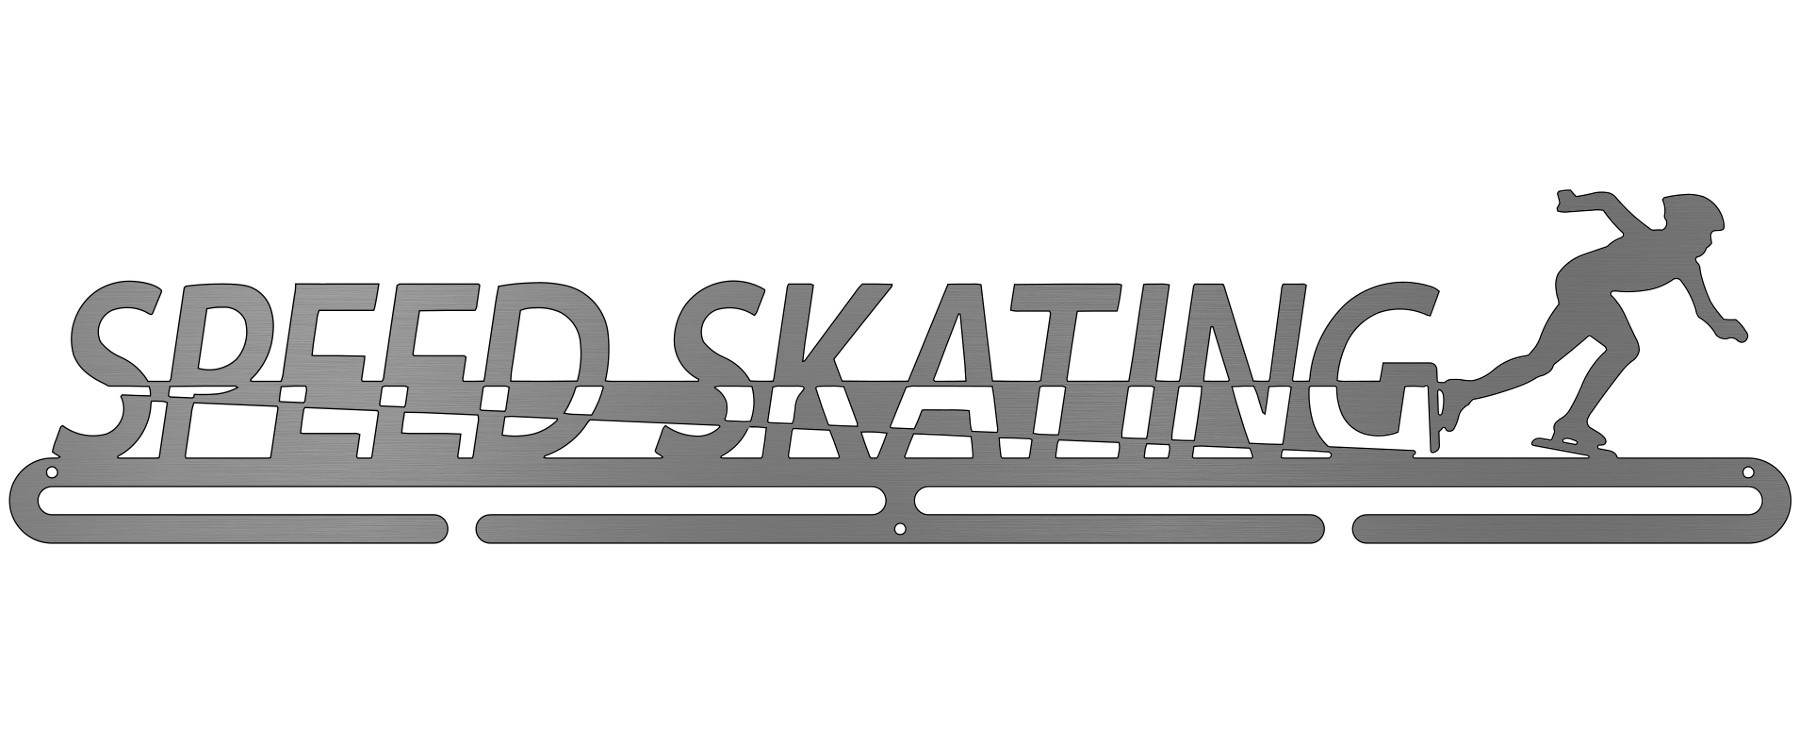 Speed Skating